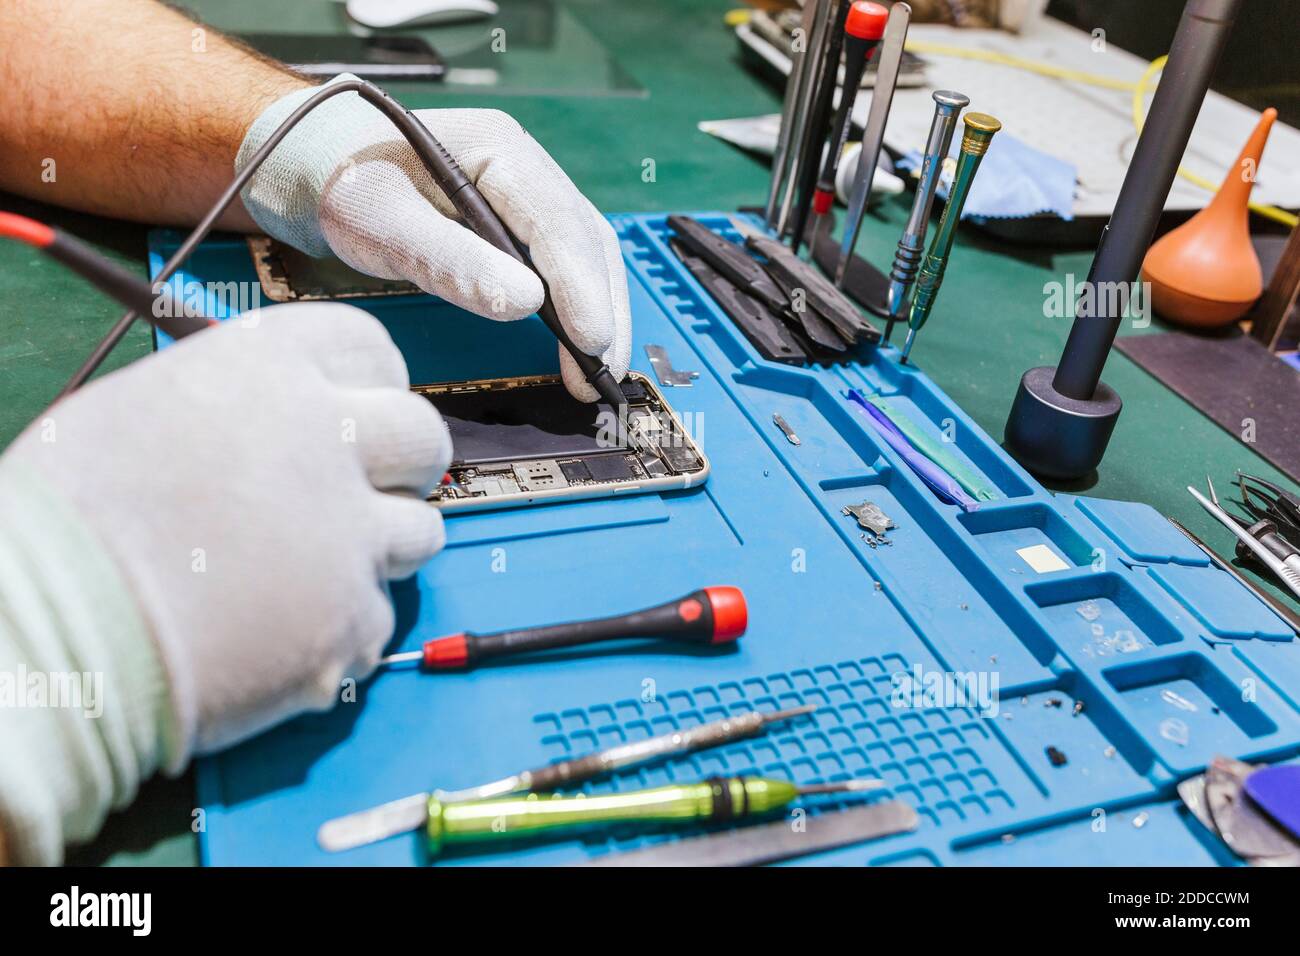 Technician examining damaged mobile phone at workbench at repair shop Stock Photo